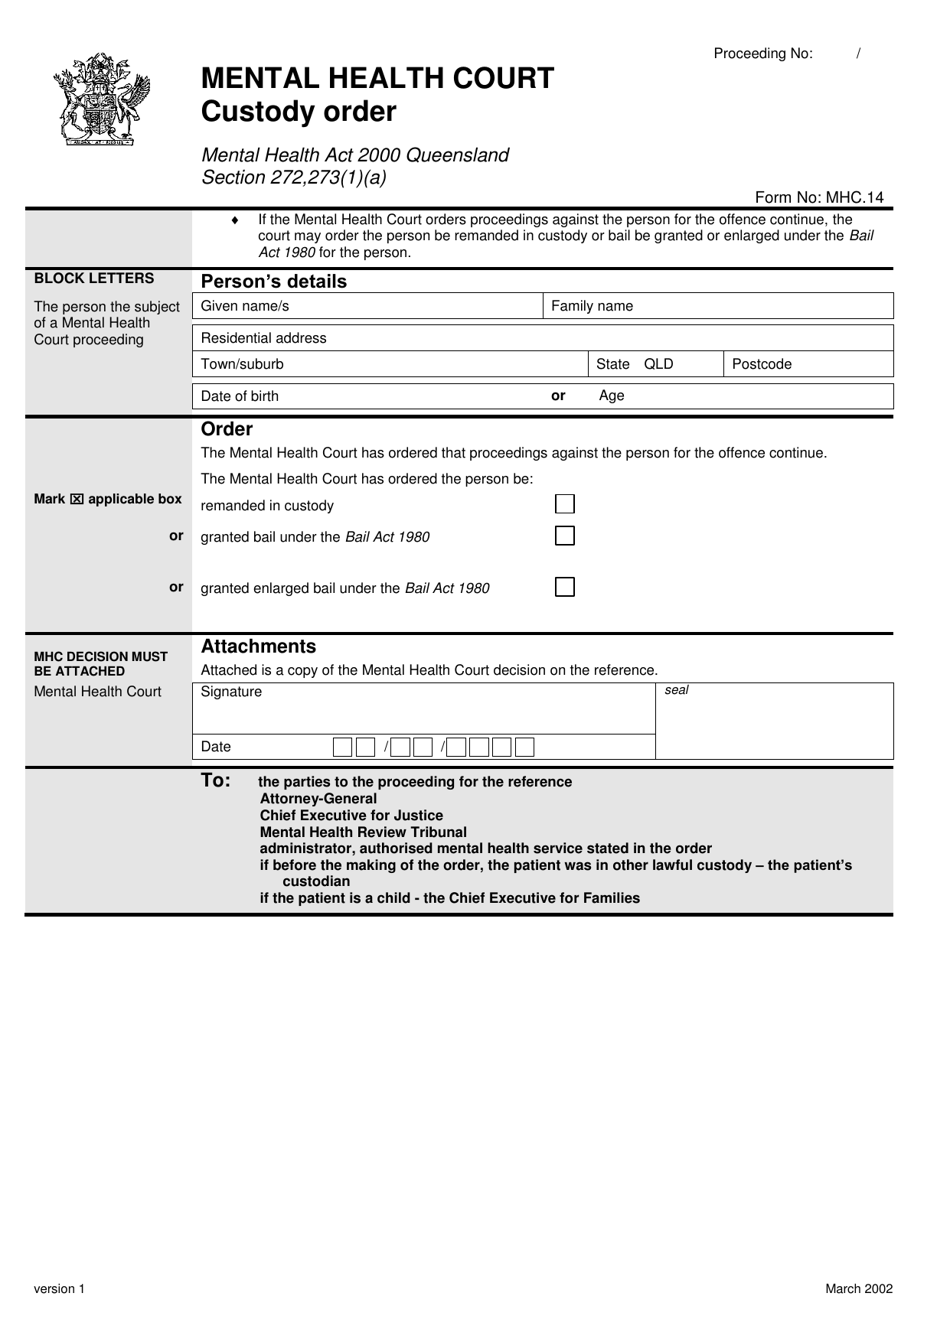 Form MHC.14 Custody Order - Queensland, Australia, Page 1